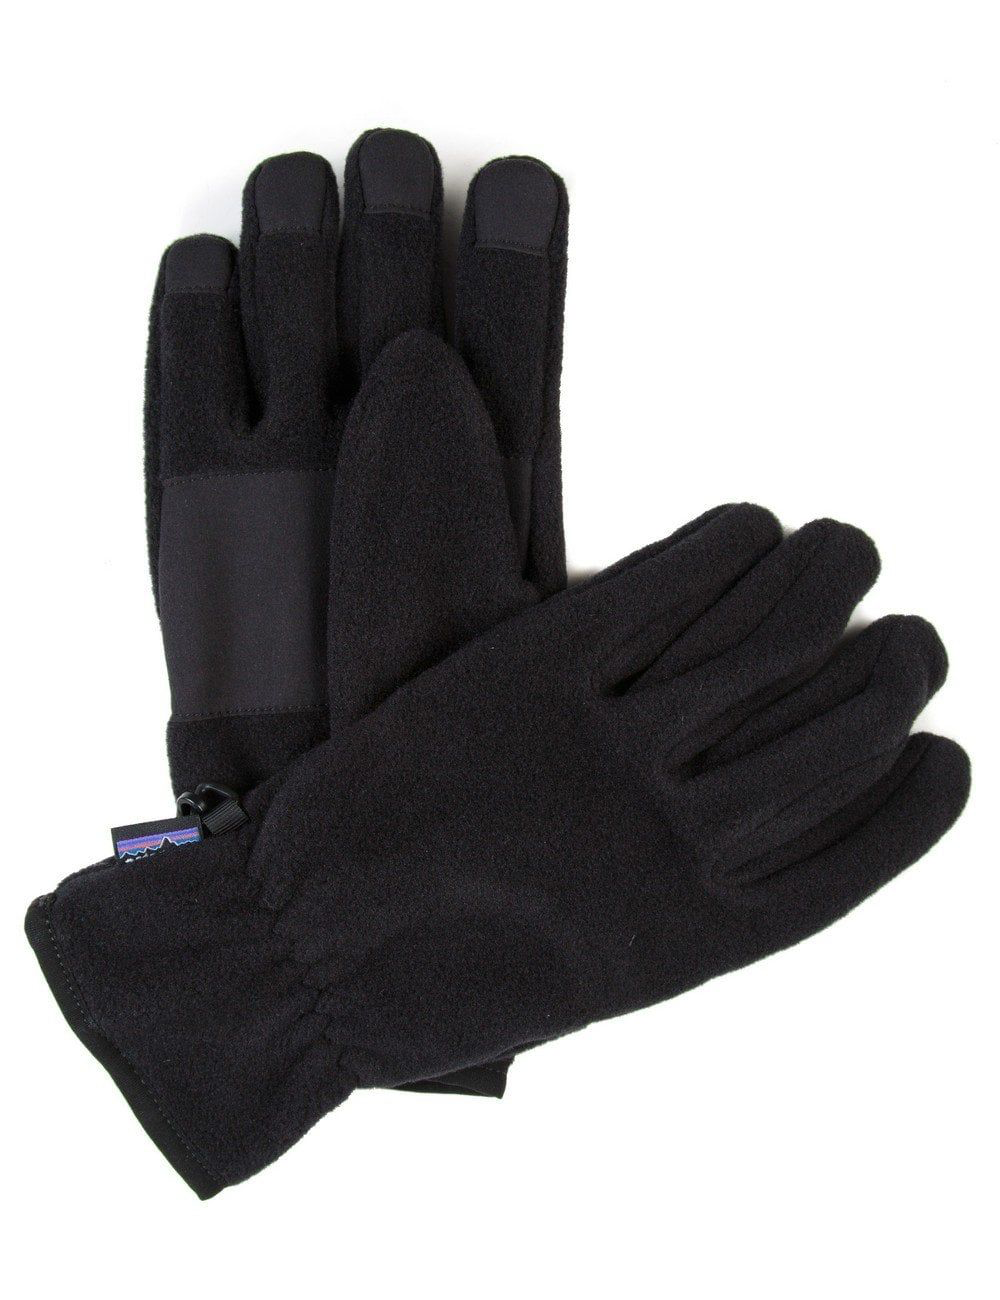 Patagonia Synchilla Fleece Gloves - Black - Large